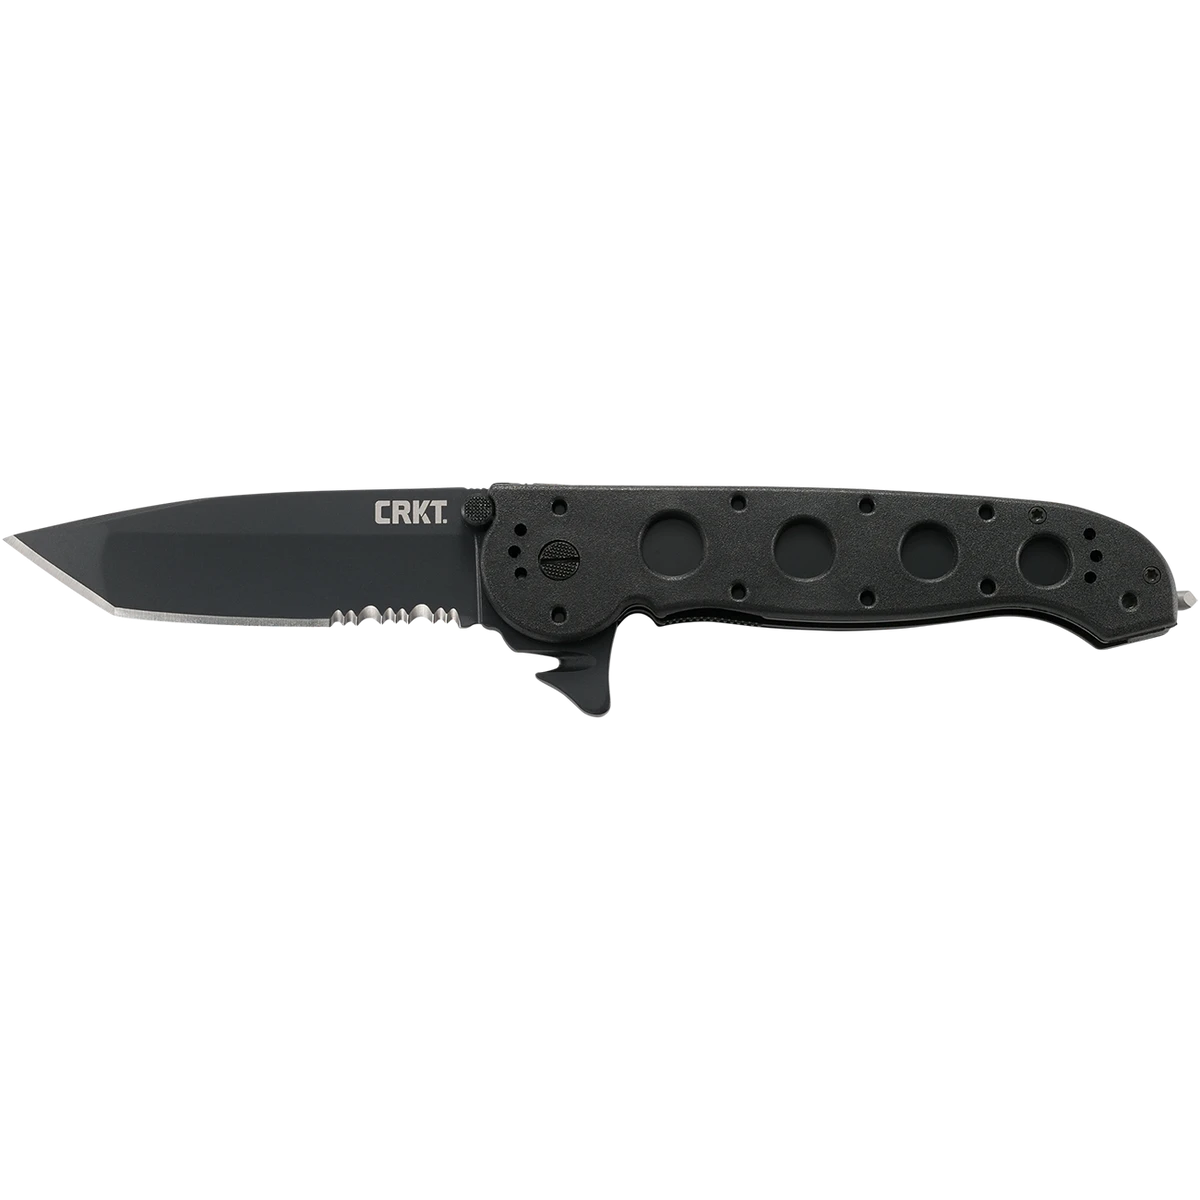 CRKT Carson M16-14ZLEK - Tanto - Black GFN Handle Knife - AUS-8 Steel